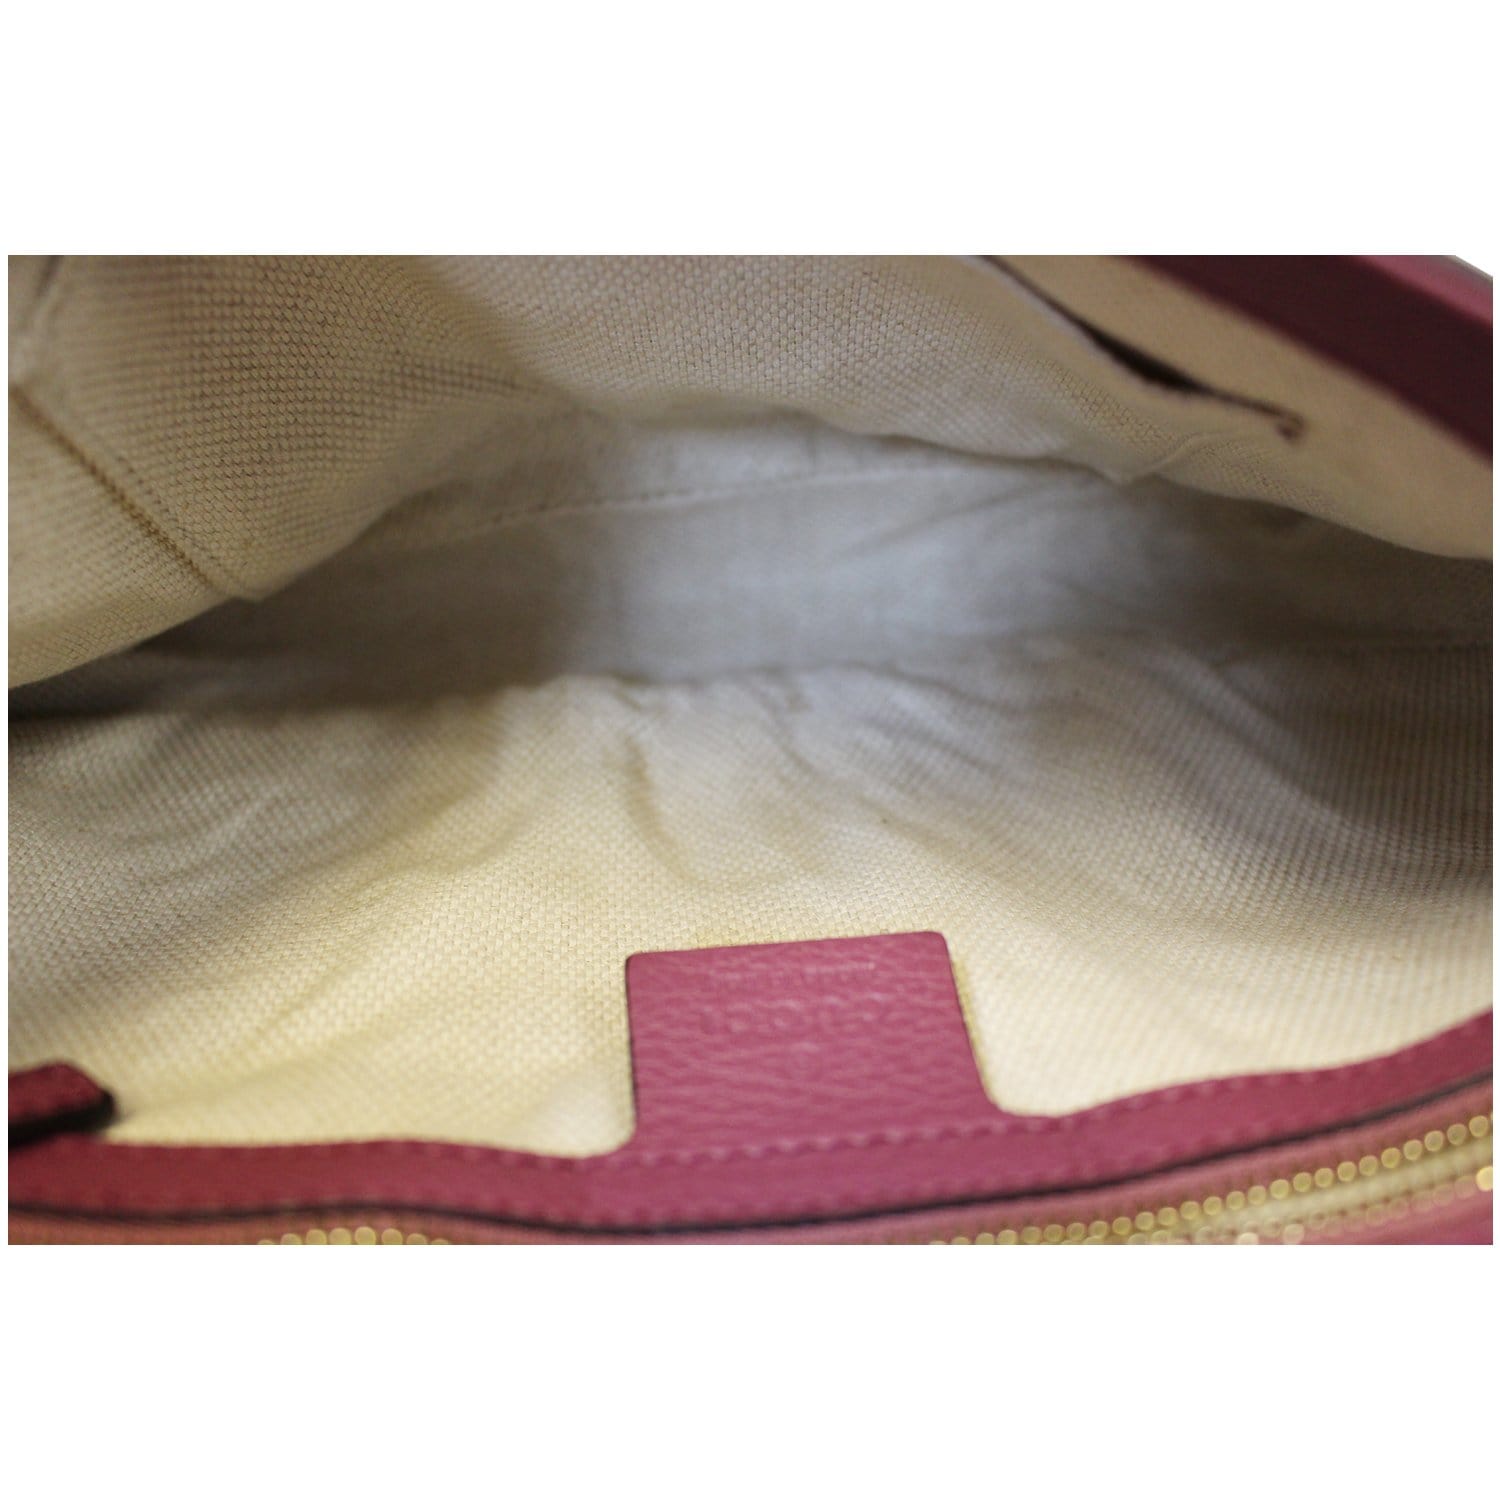 Gucci Soho Chain Strap Shoulder Bag Leather Medium Purple 211470204